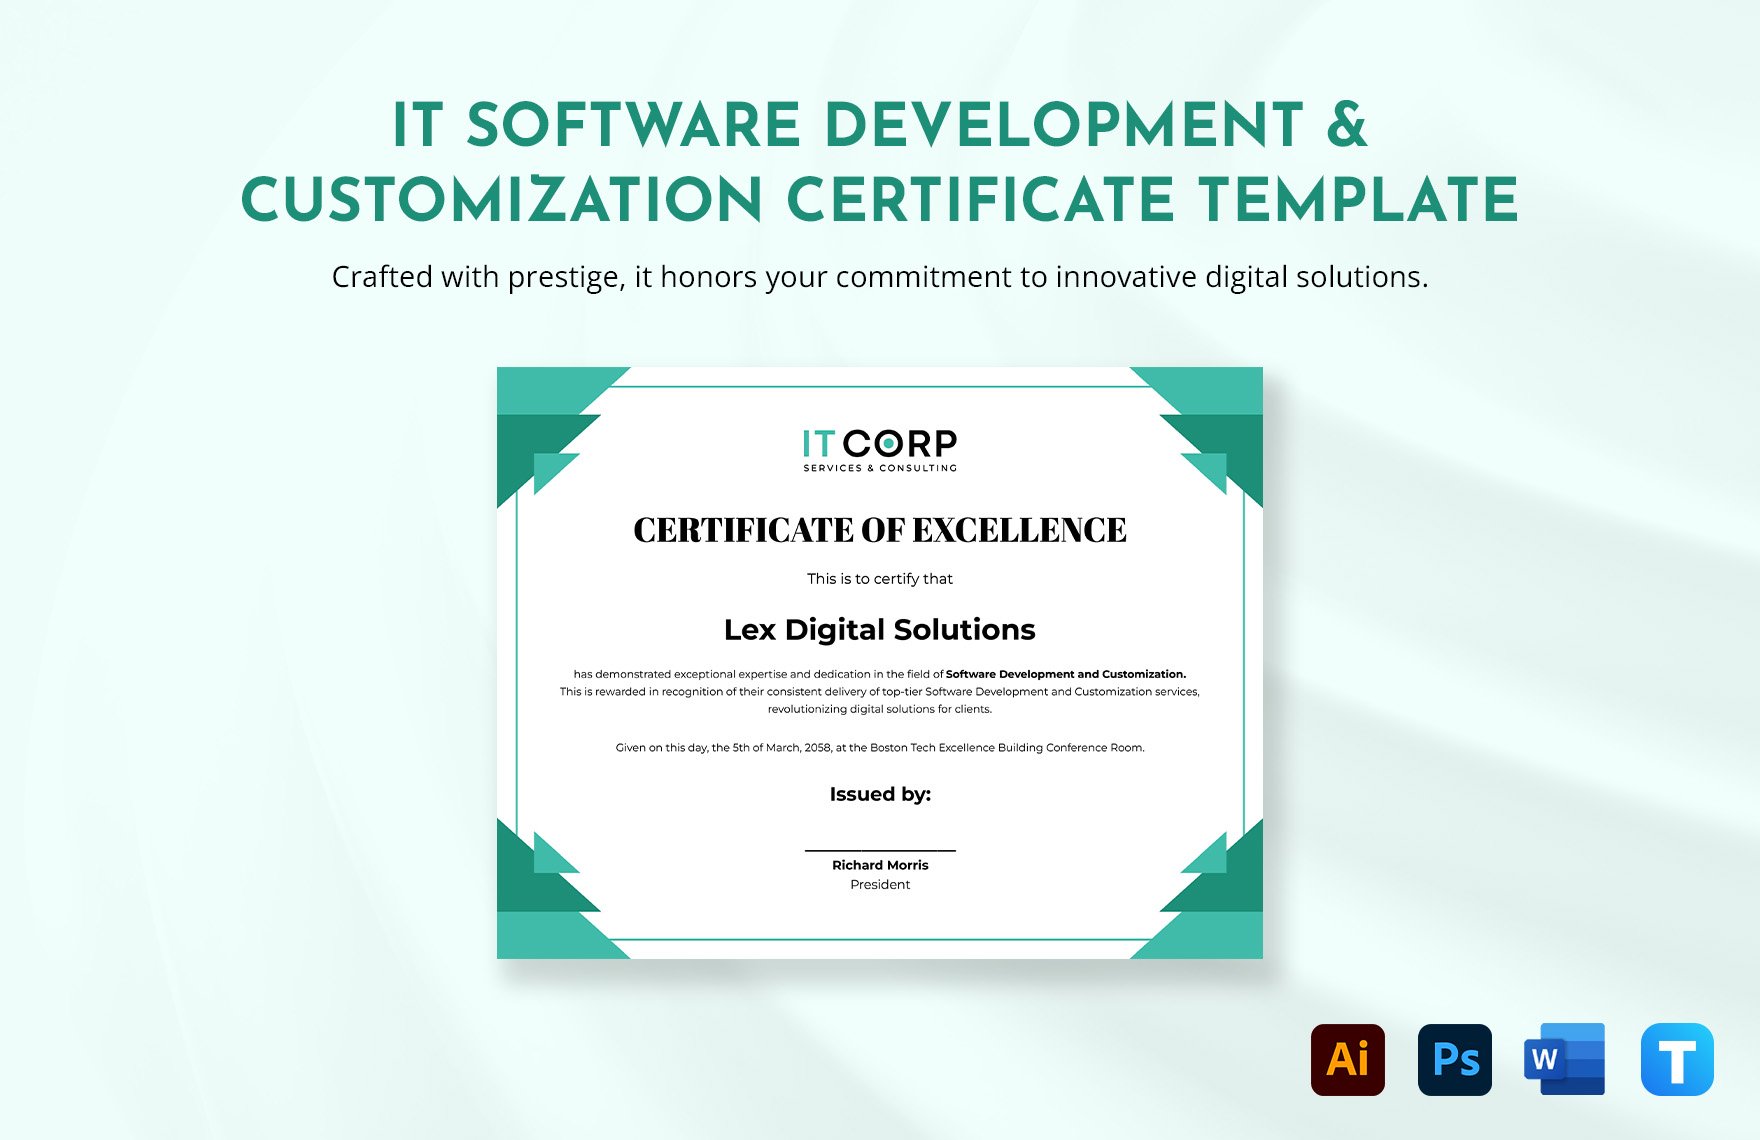 IT Software Development & Customization Certificate Template